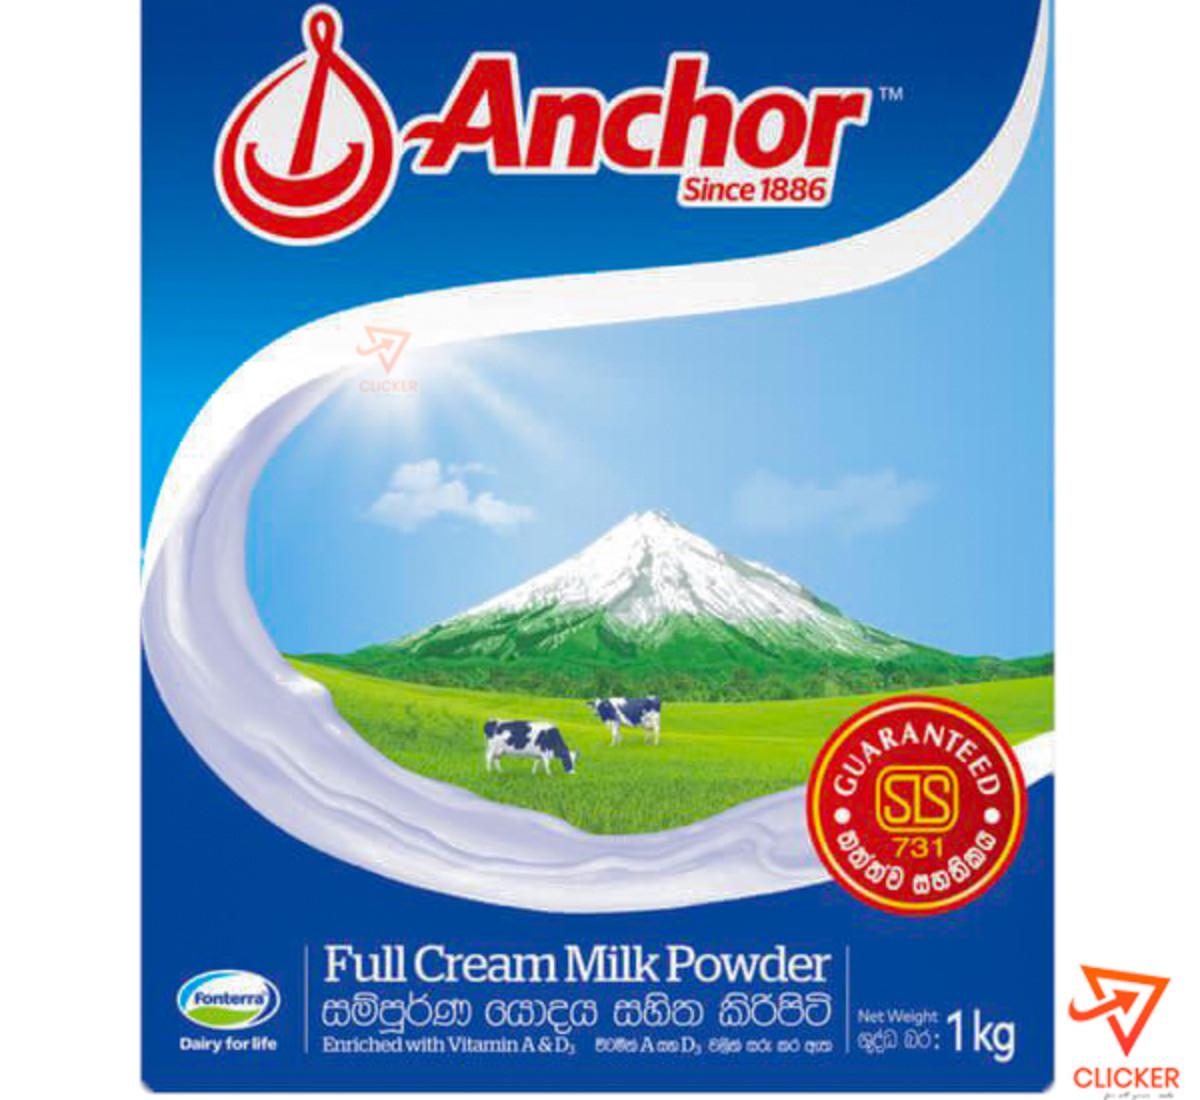 Clicker product 1kg ANCHOR full cream milk powder 1013